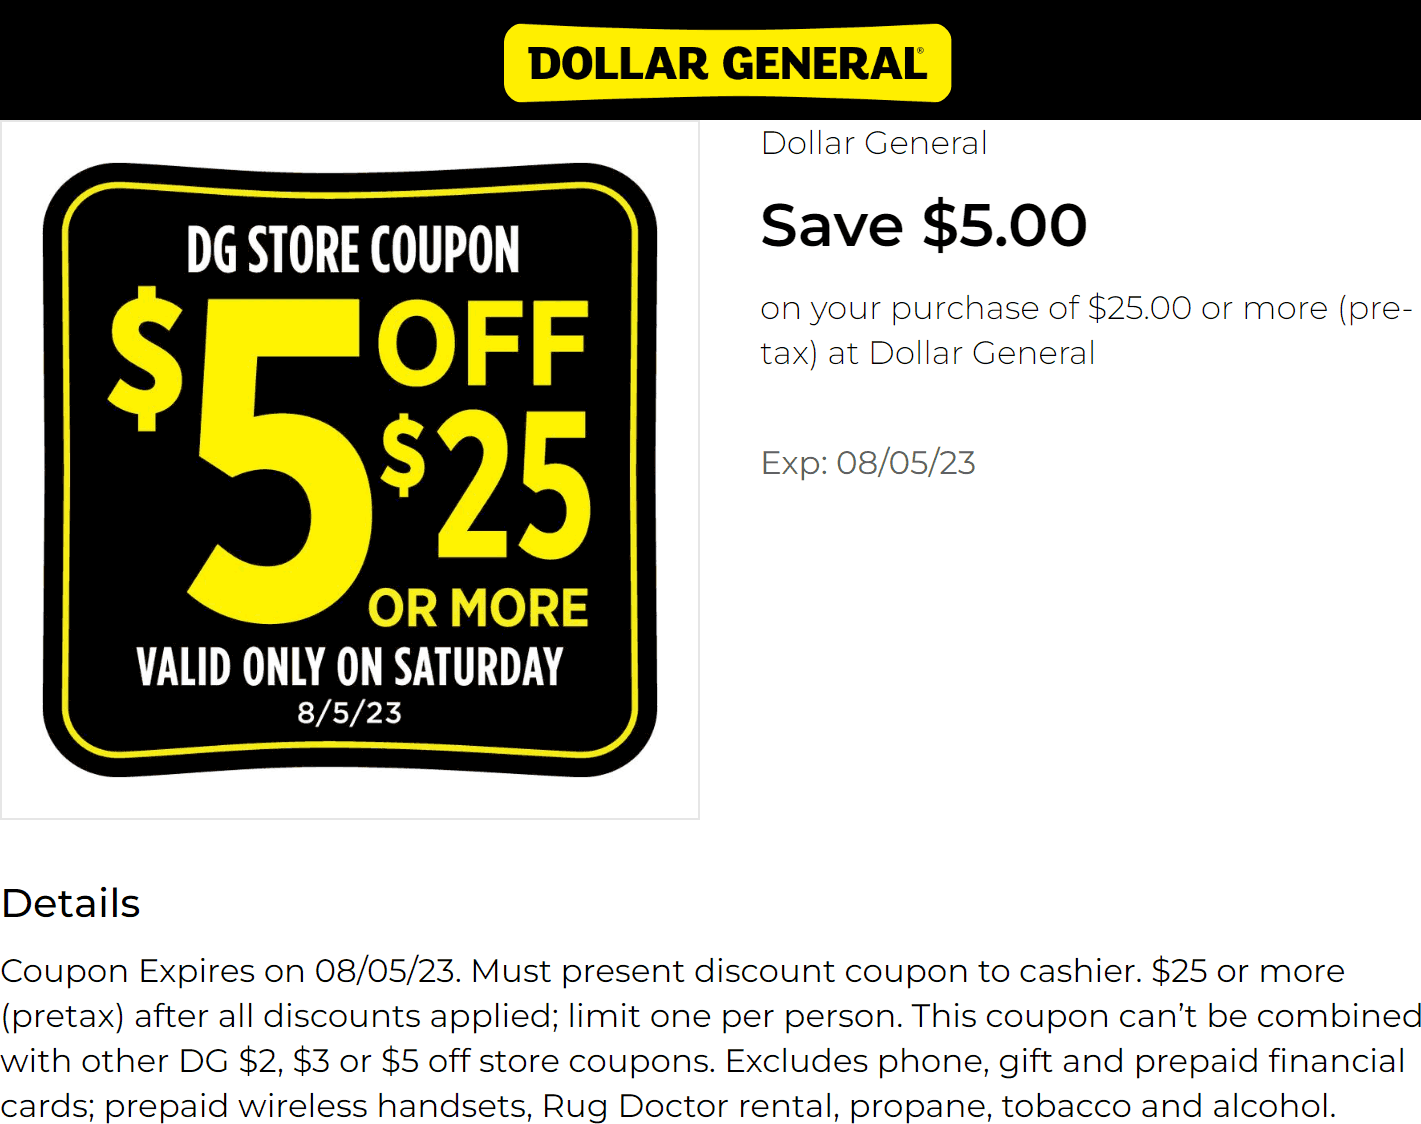 Dollar General stores Coupon  $5 off $25 Saturday at Dollar General #dollargeneral 